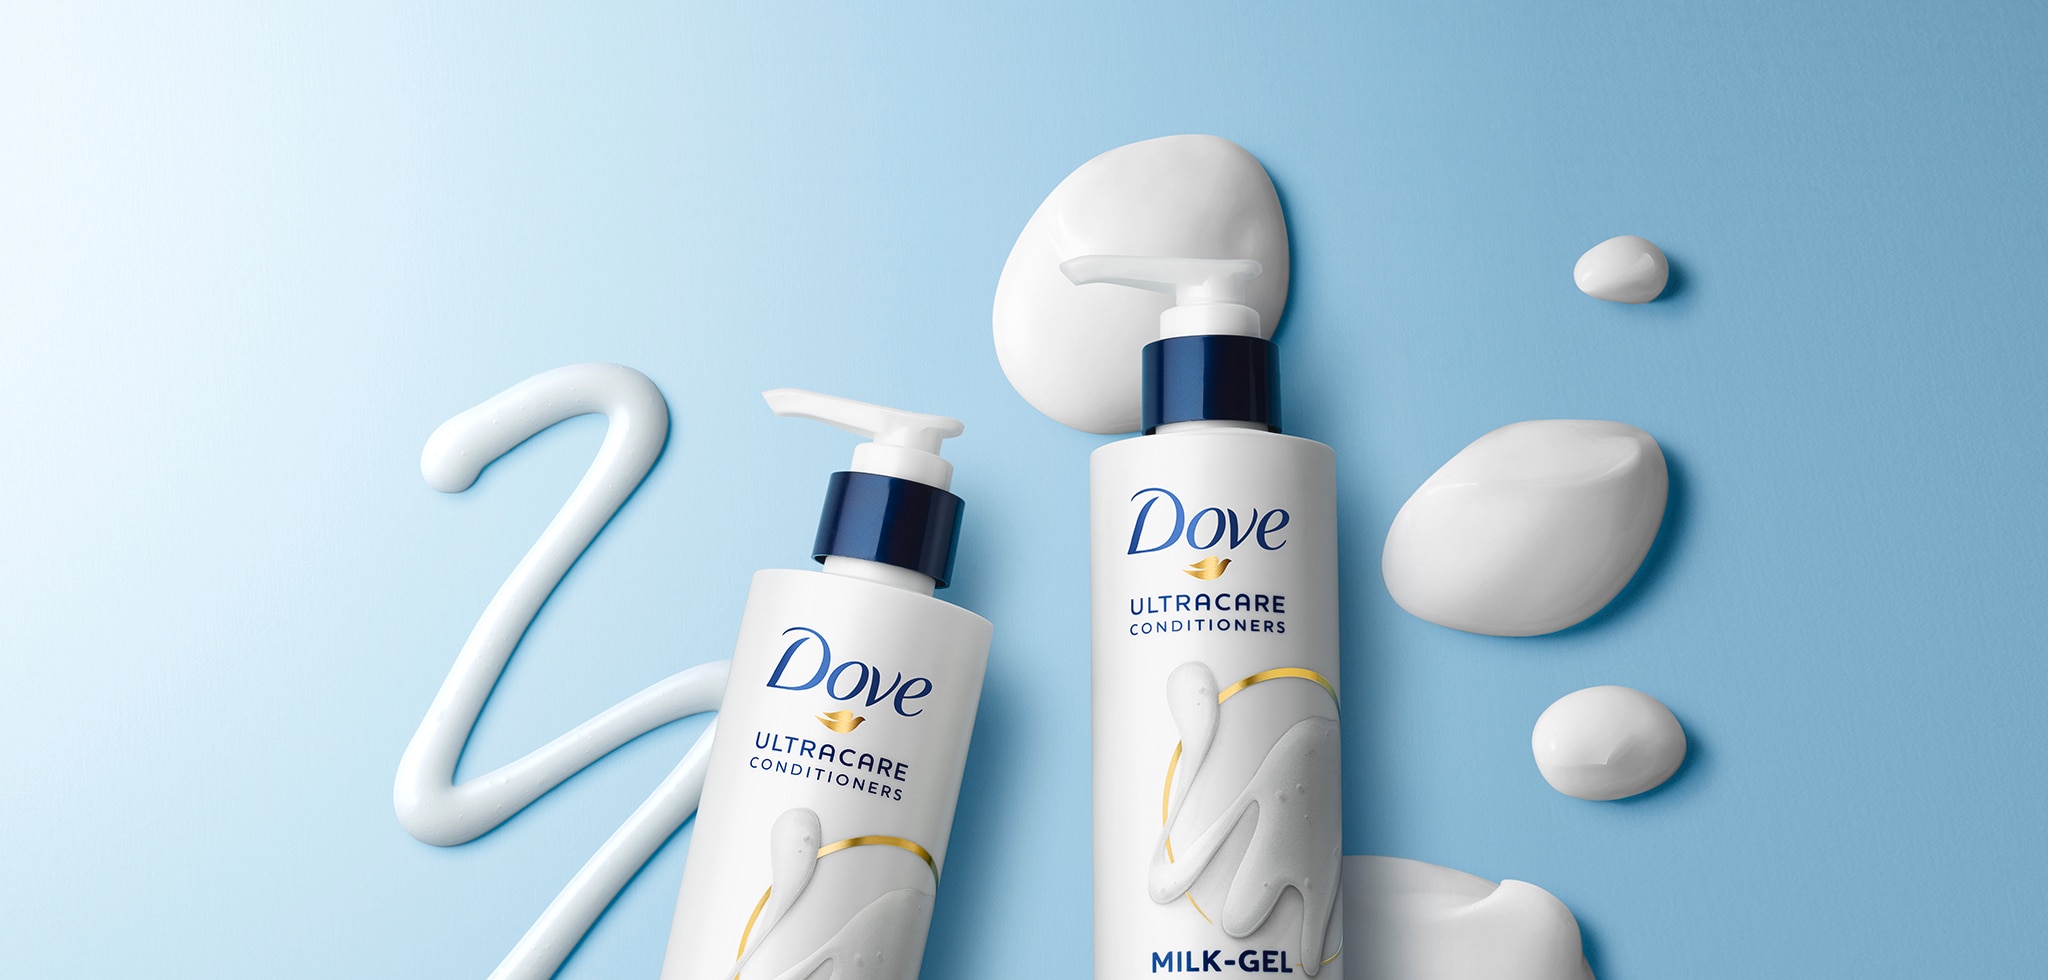 Dove Volumizing hair products